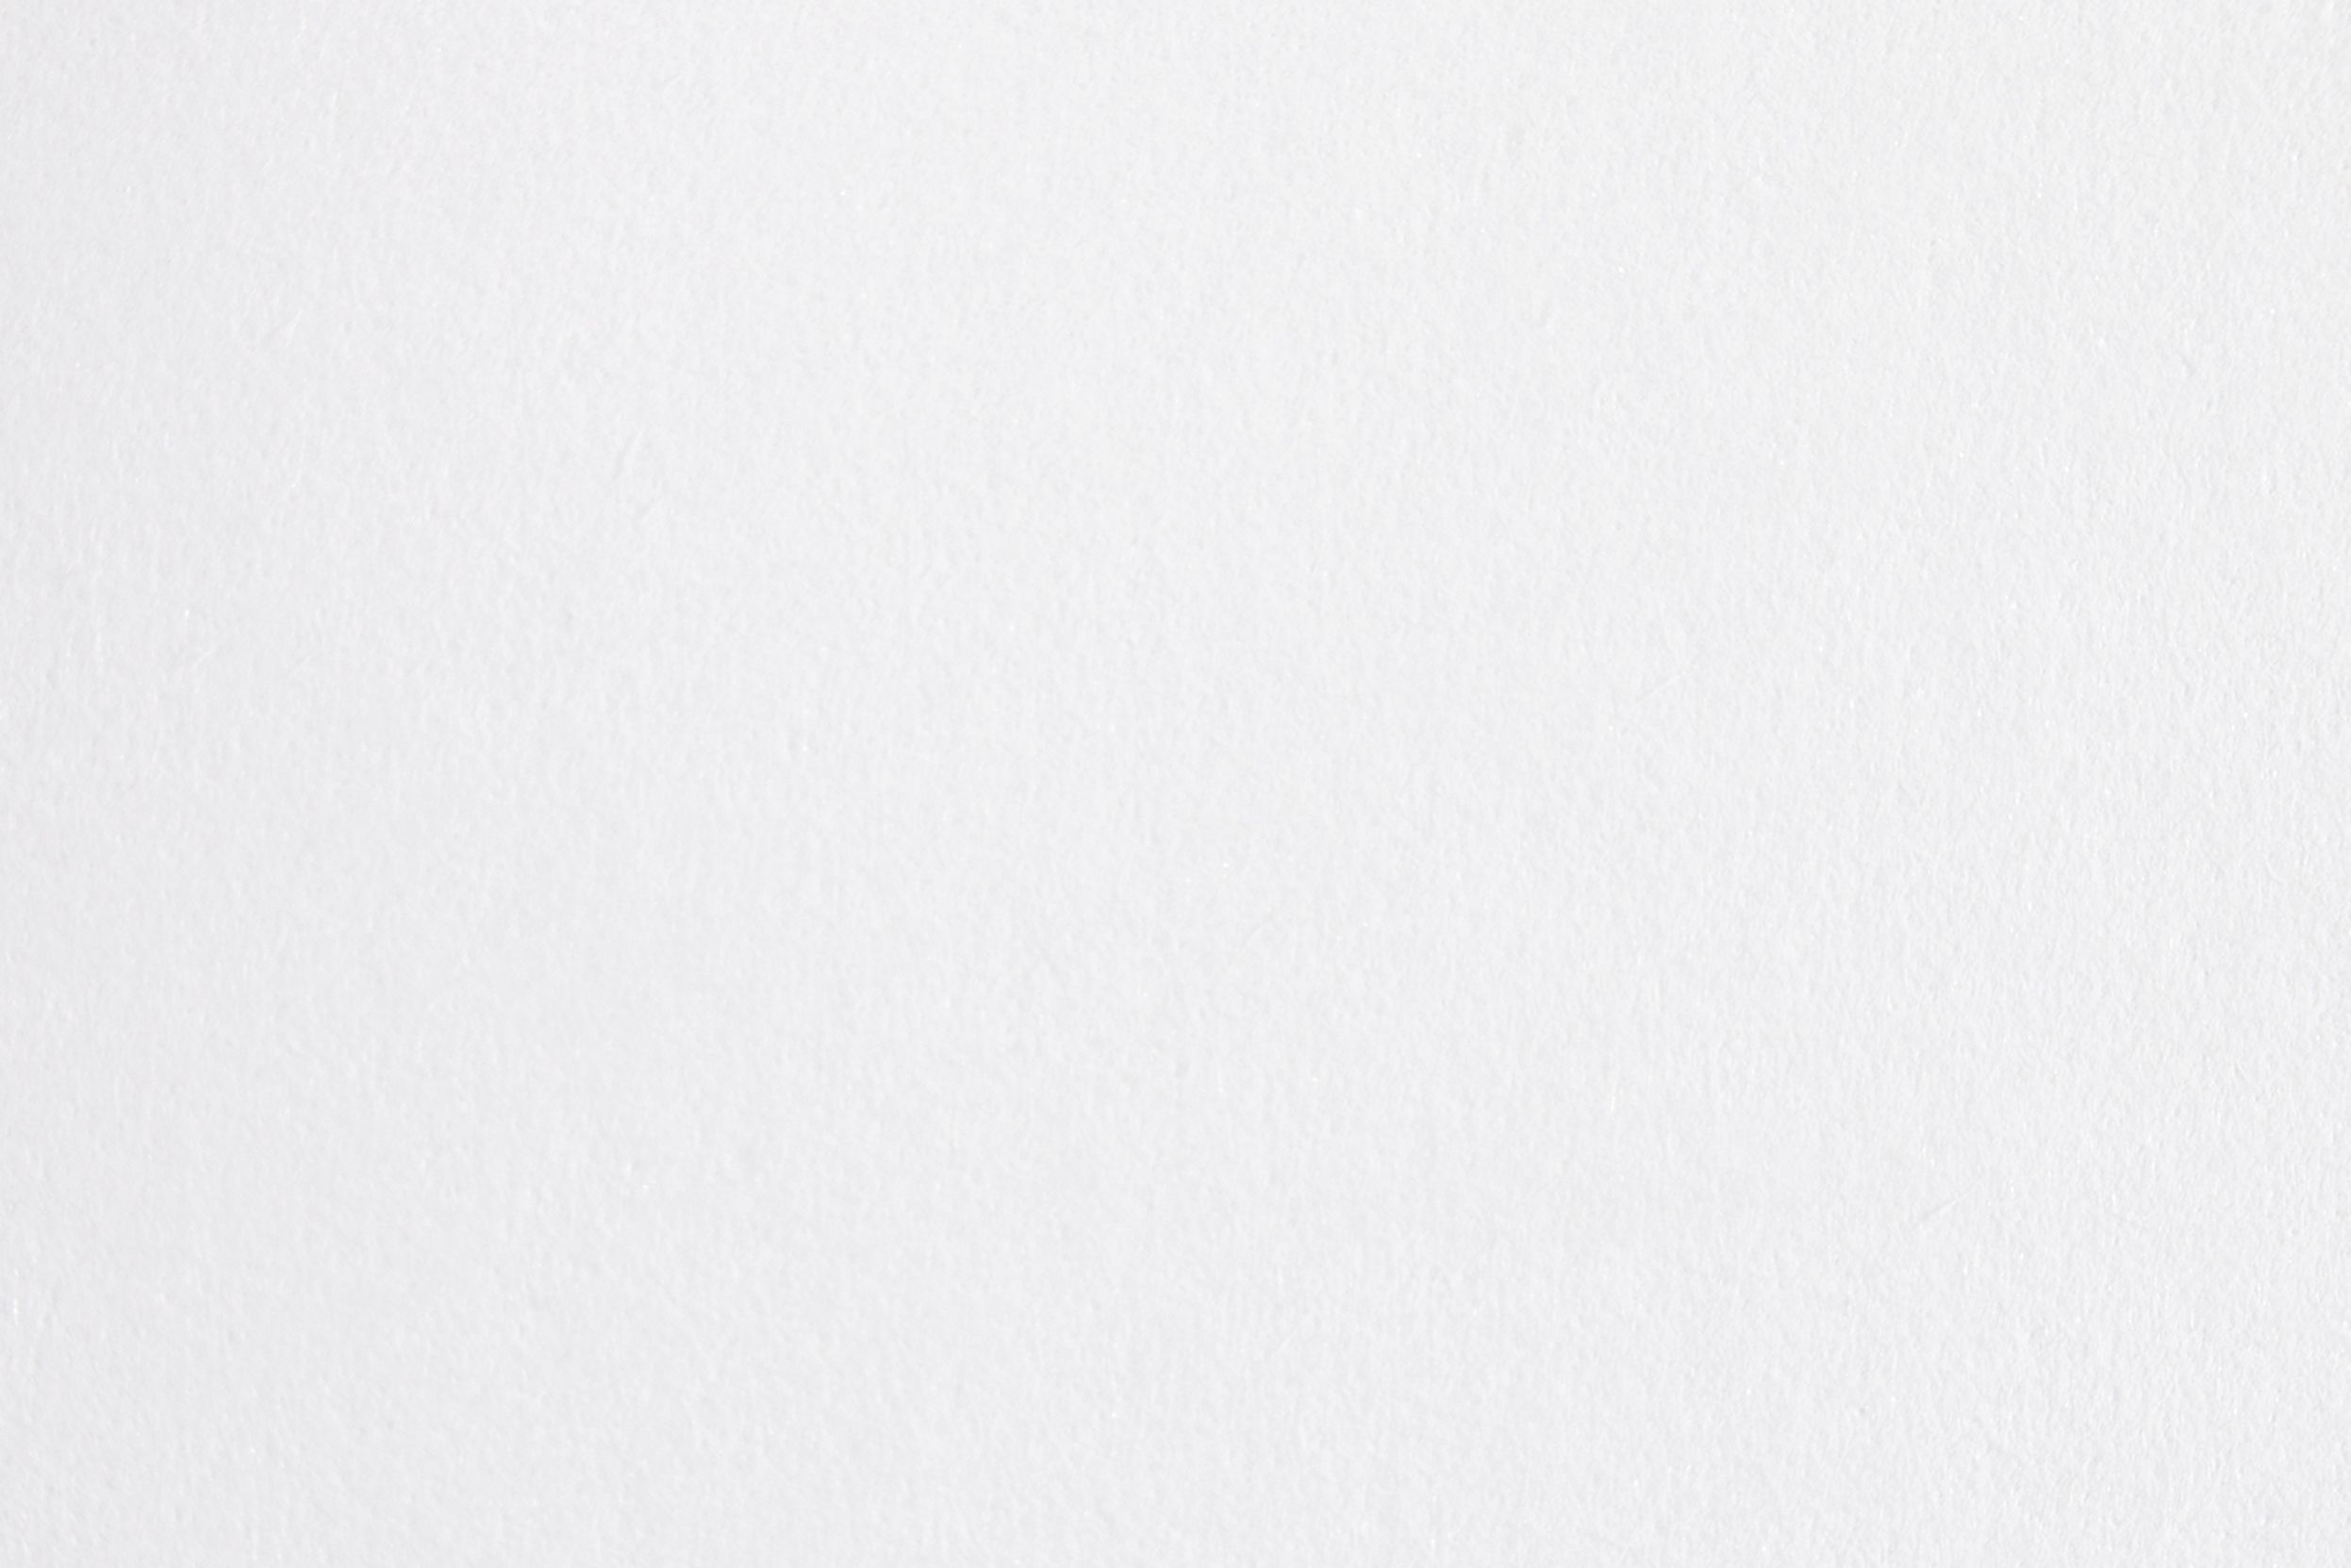 Splendorgel Extra White, strip, finestra: Carta naturale di pura cellulosa certificata FSC. Superficie liscia e vellutata. Produttore: Fedrigoni